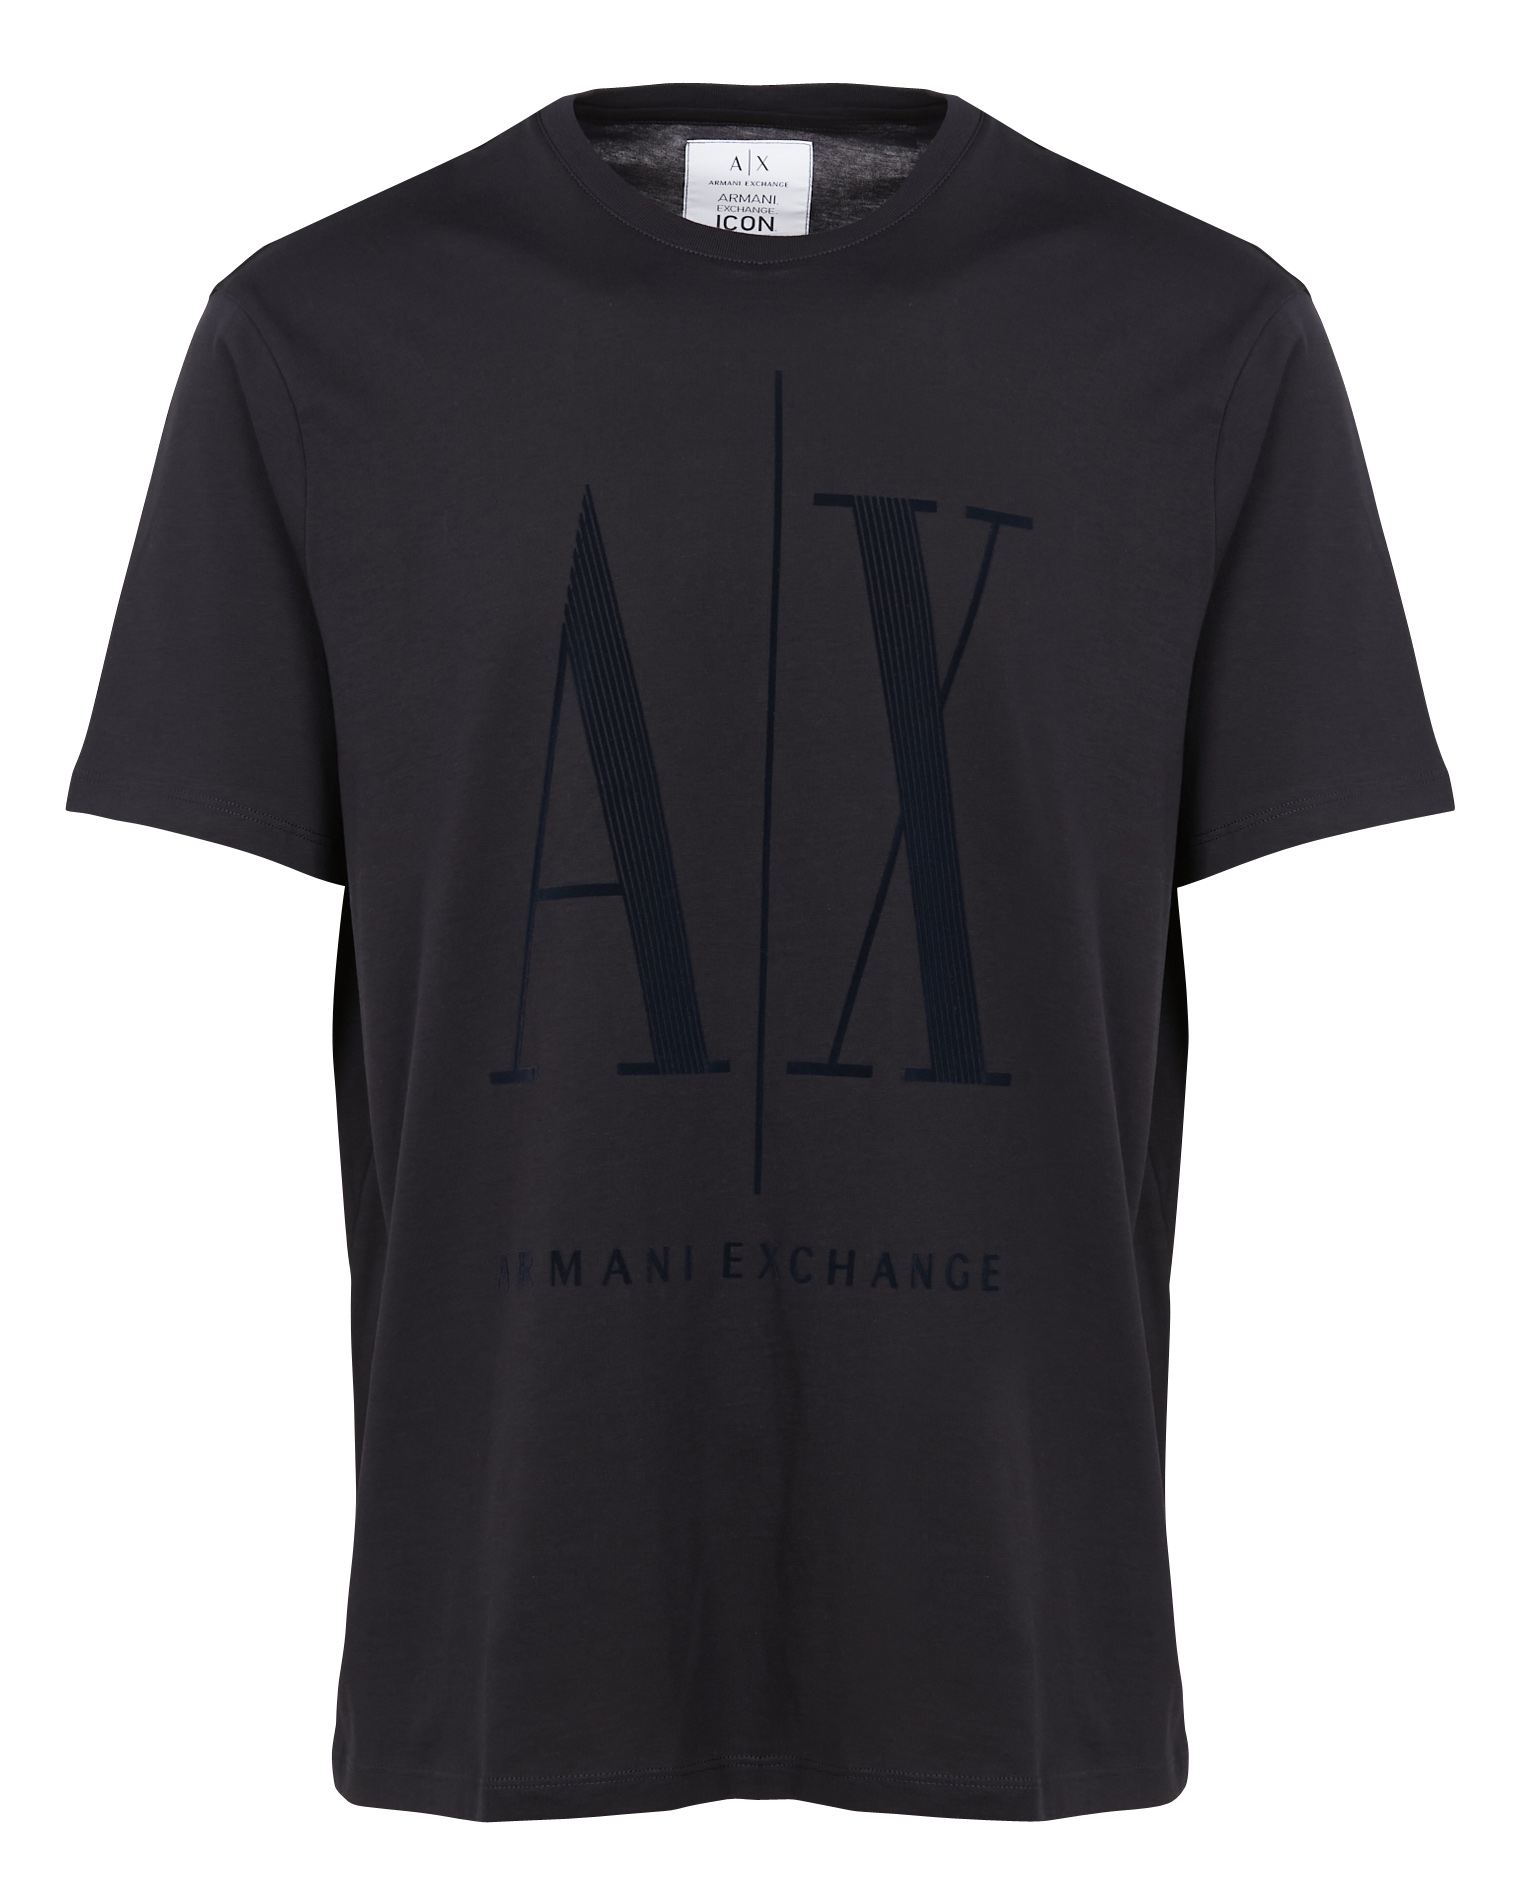 ax t shirt singapore